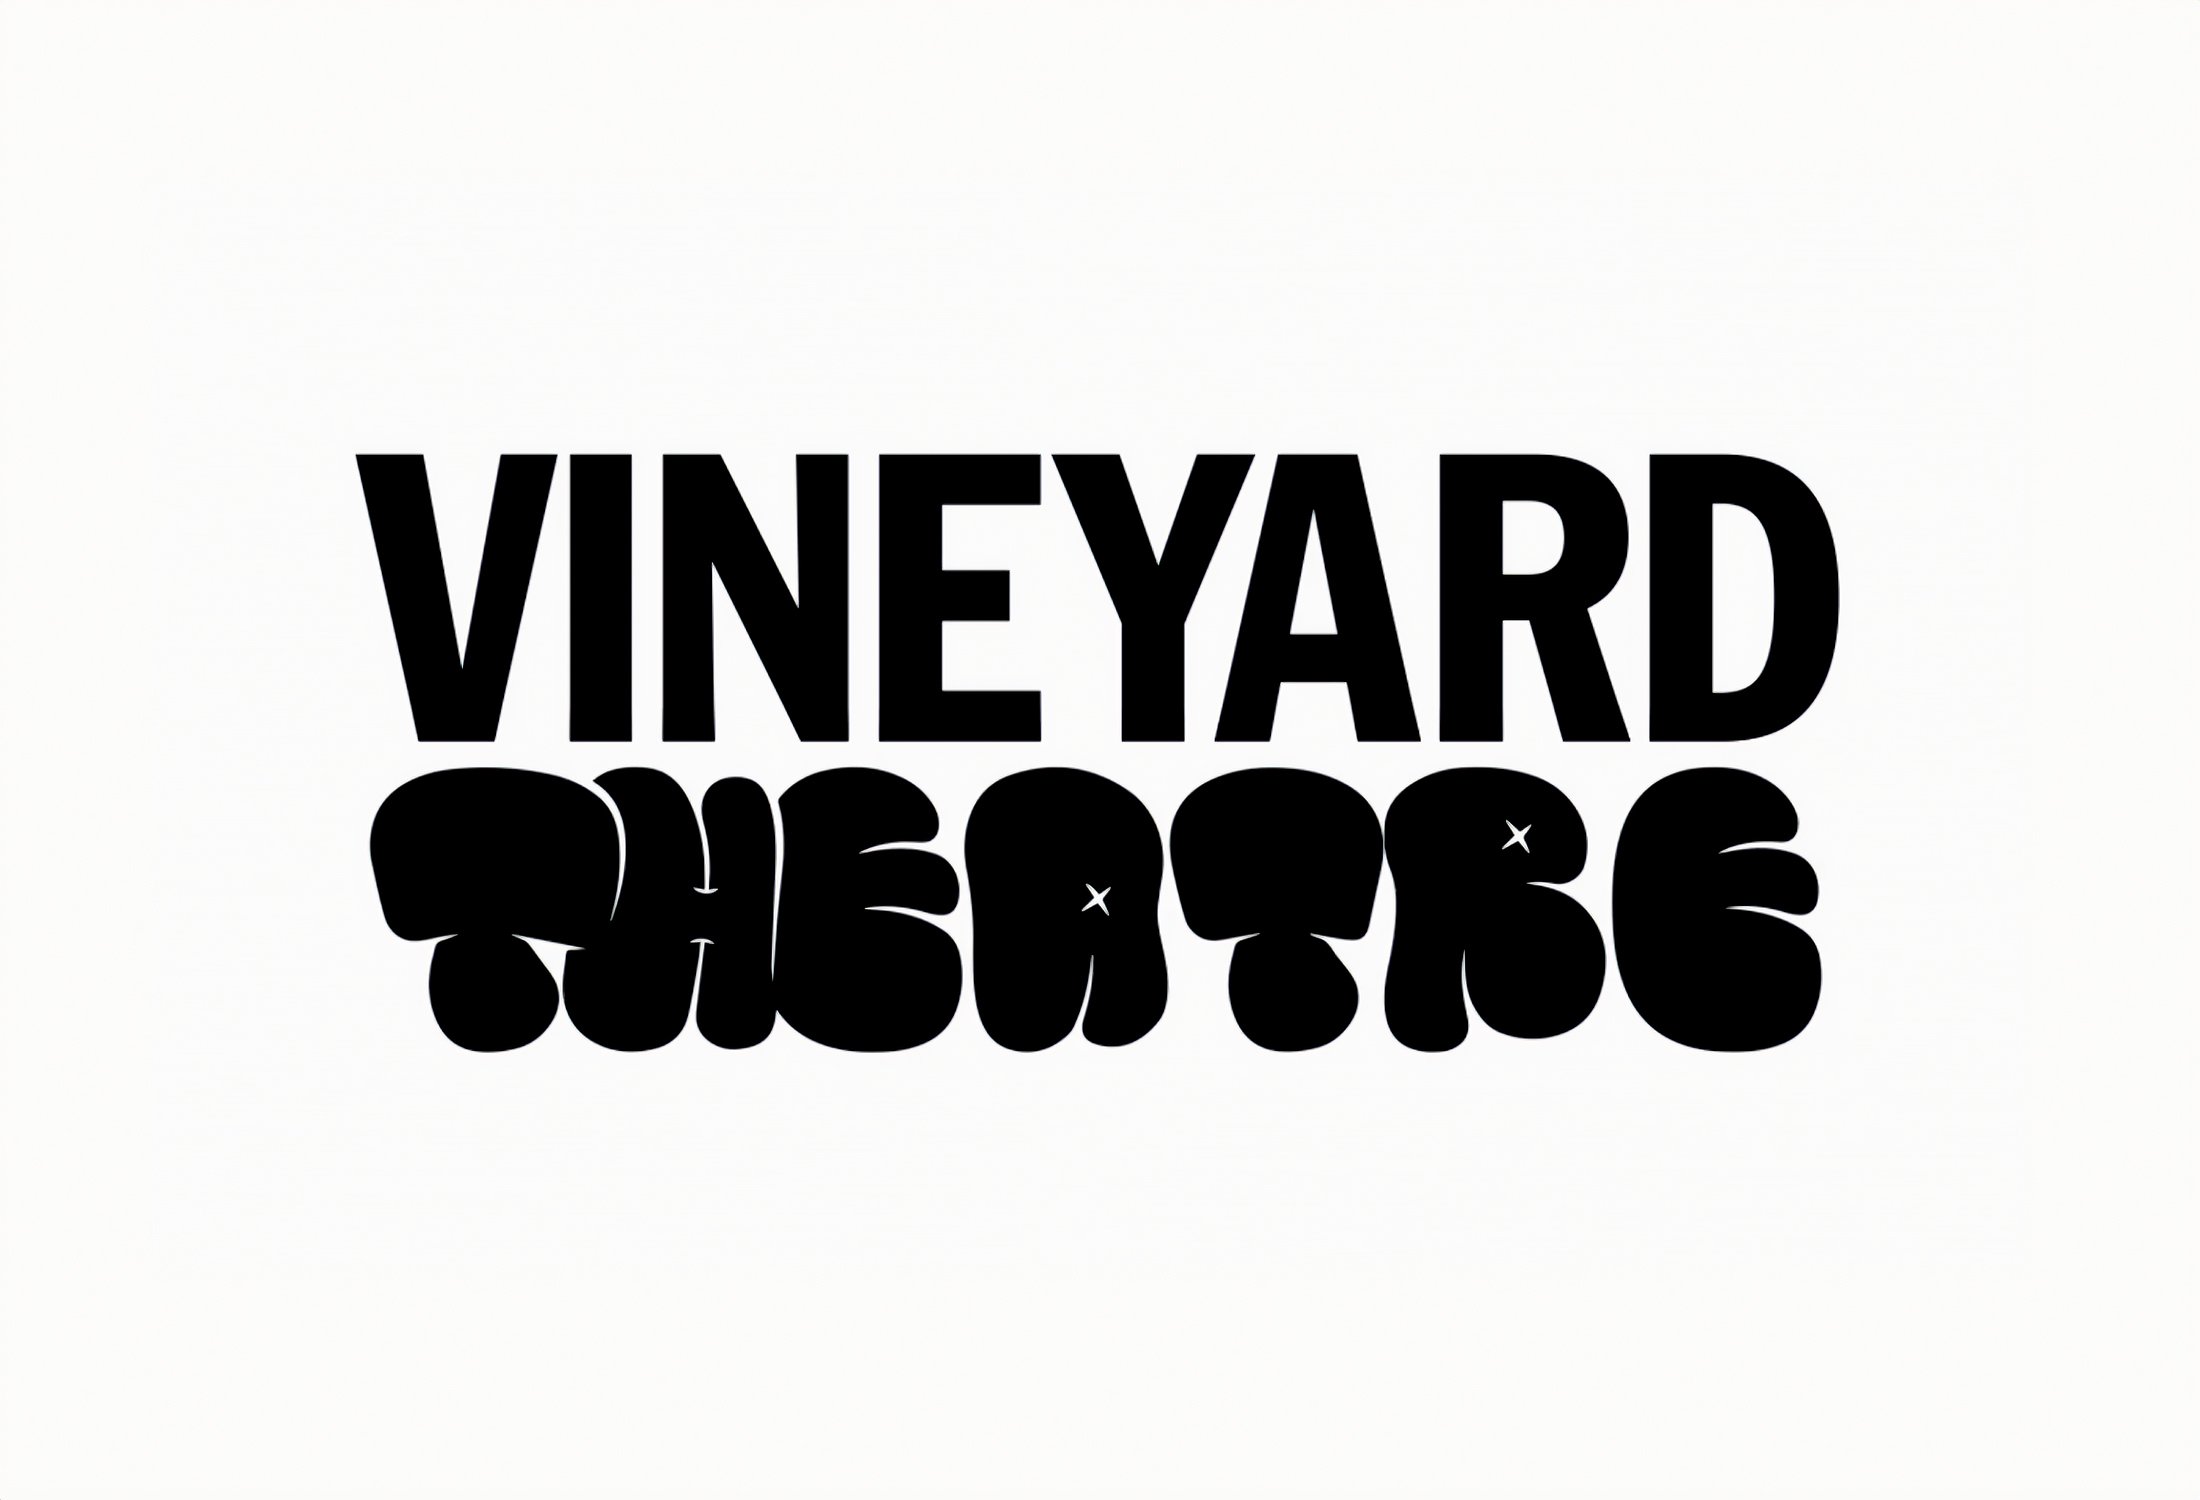 Flexible logotype by London-based NB Studio for New York City's Vineyard Theatre